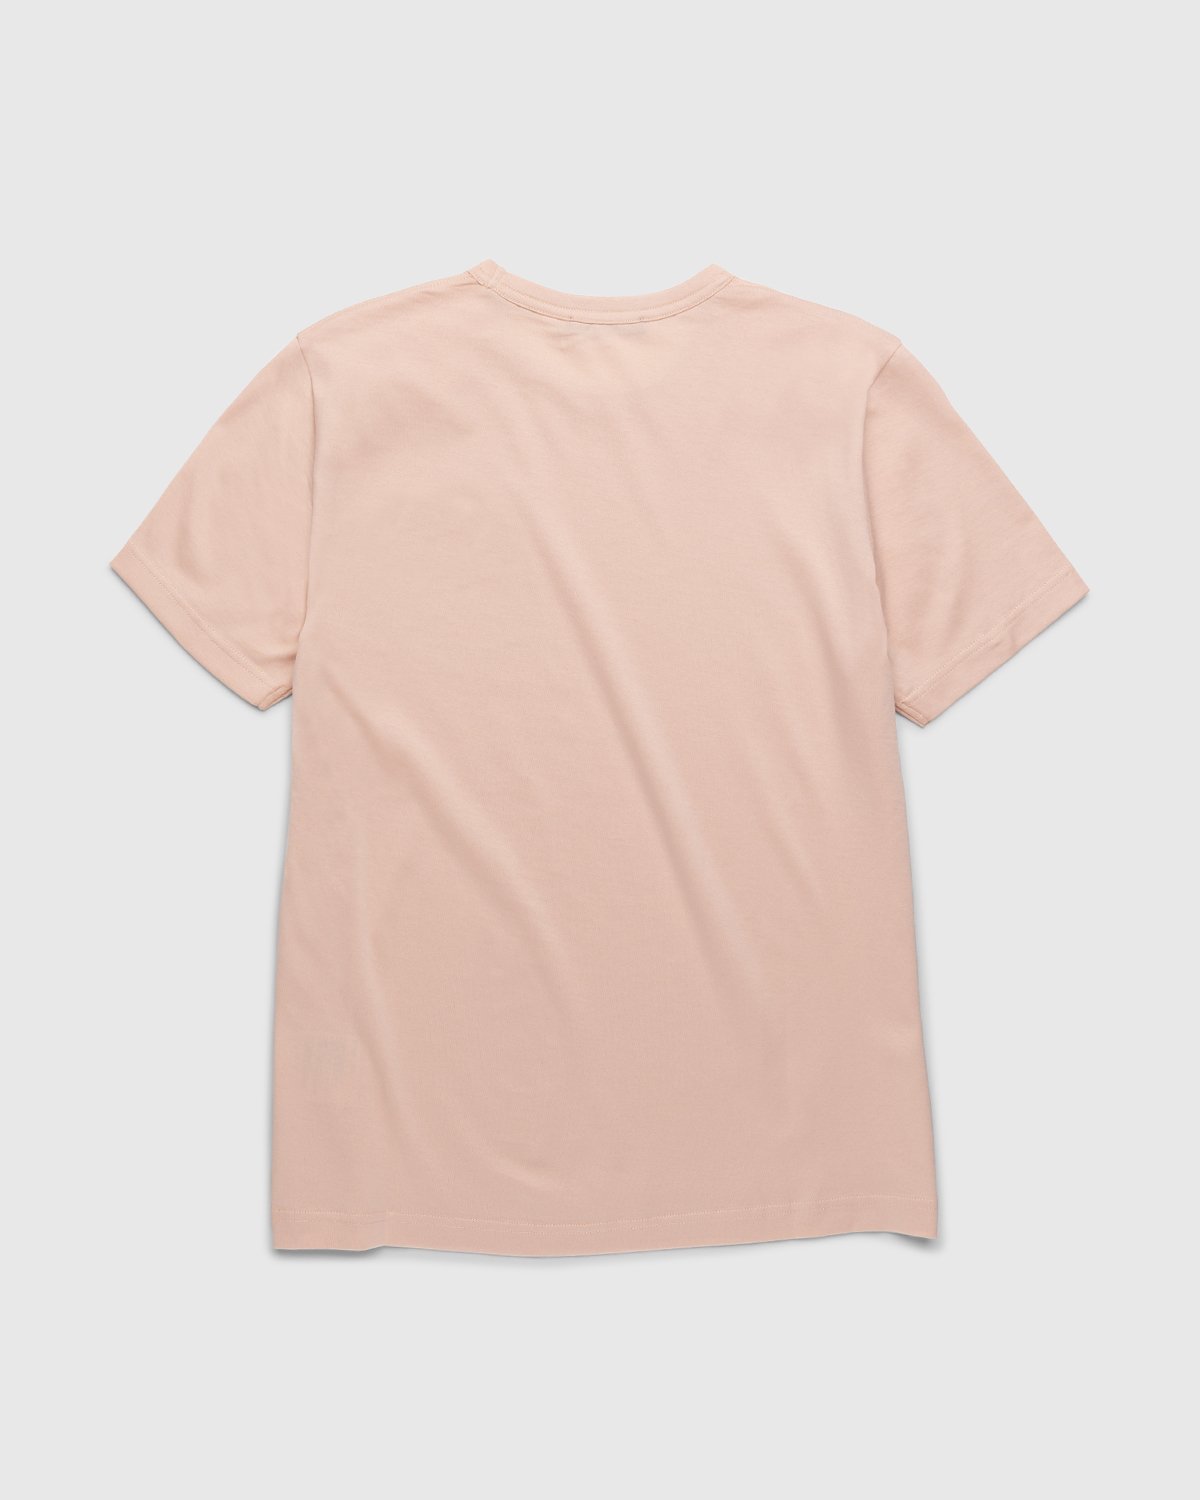 Acne Studios - Slim Fit T-Shirt Powder Pink - Clothing - Pink - Image 2